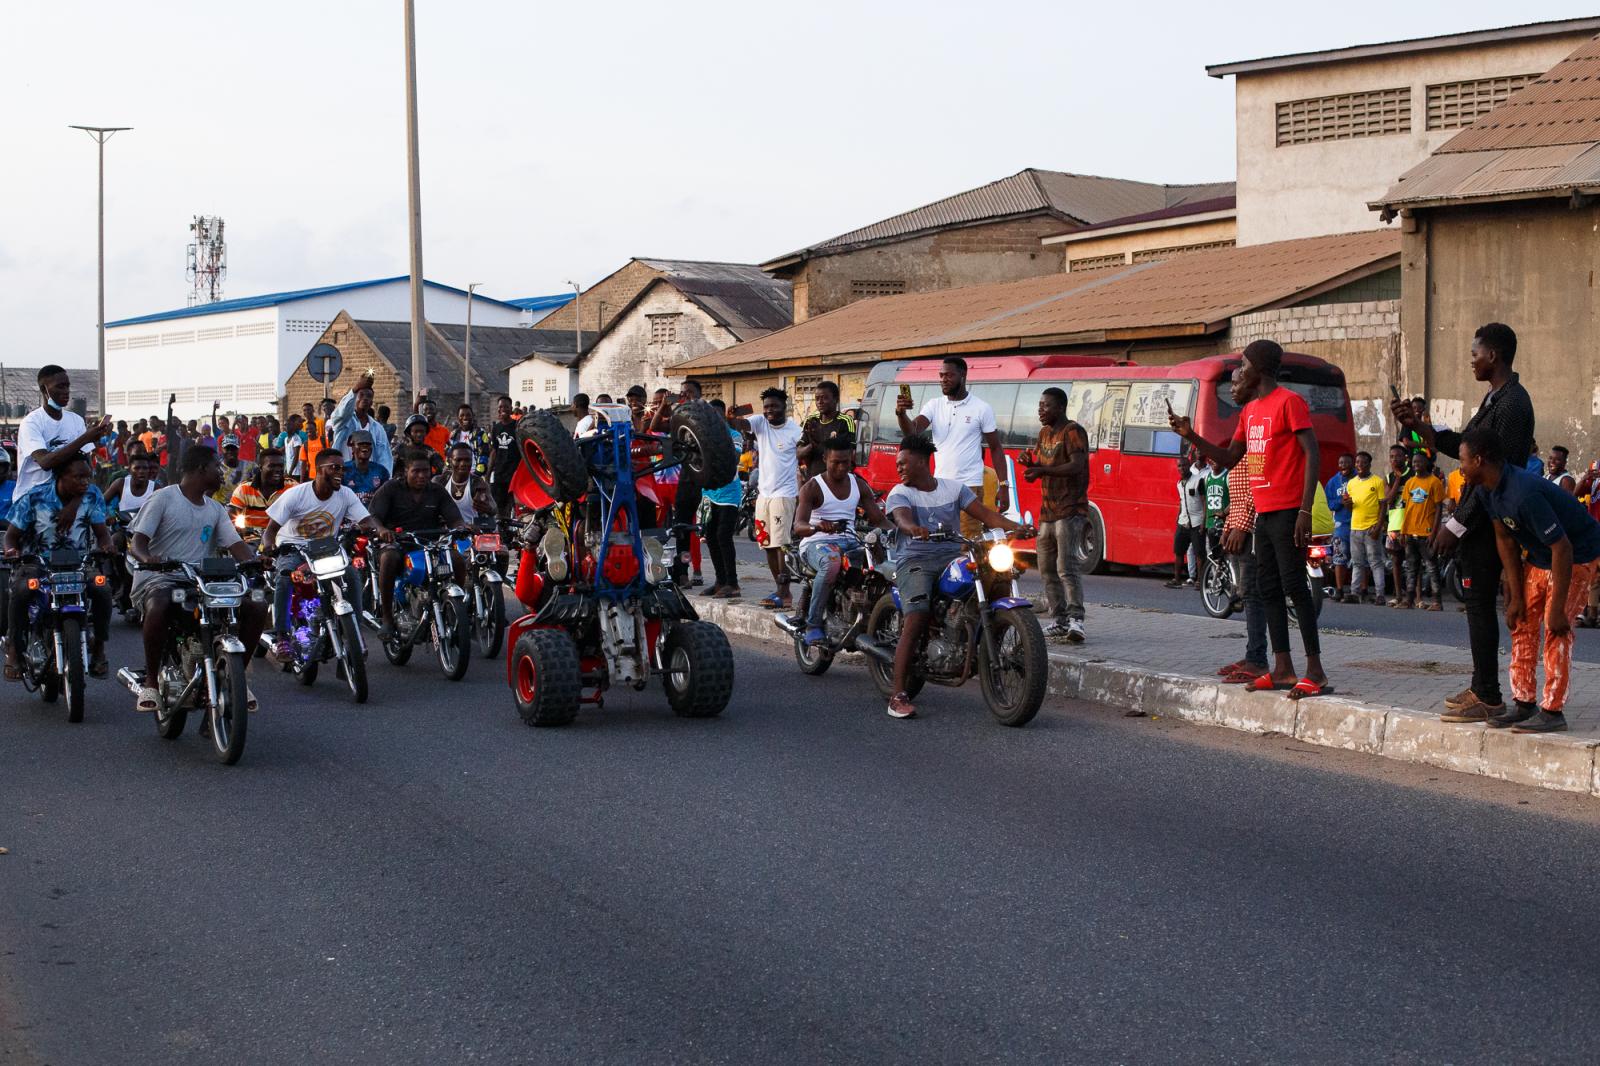 Motorcycle stunts on the streets of Jamestown in Accra, Ghana.